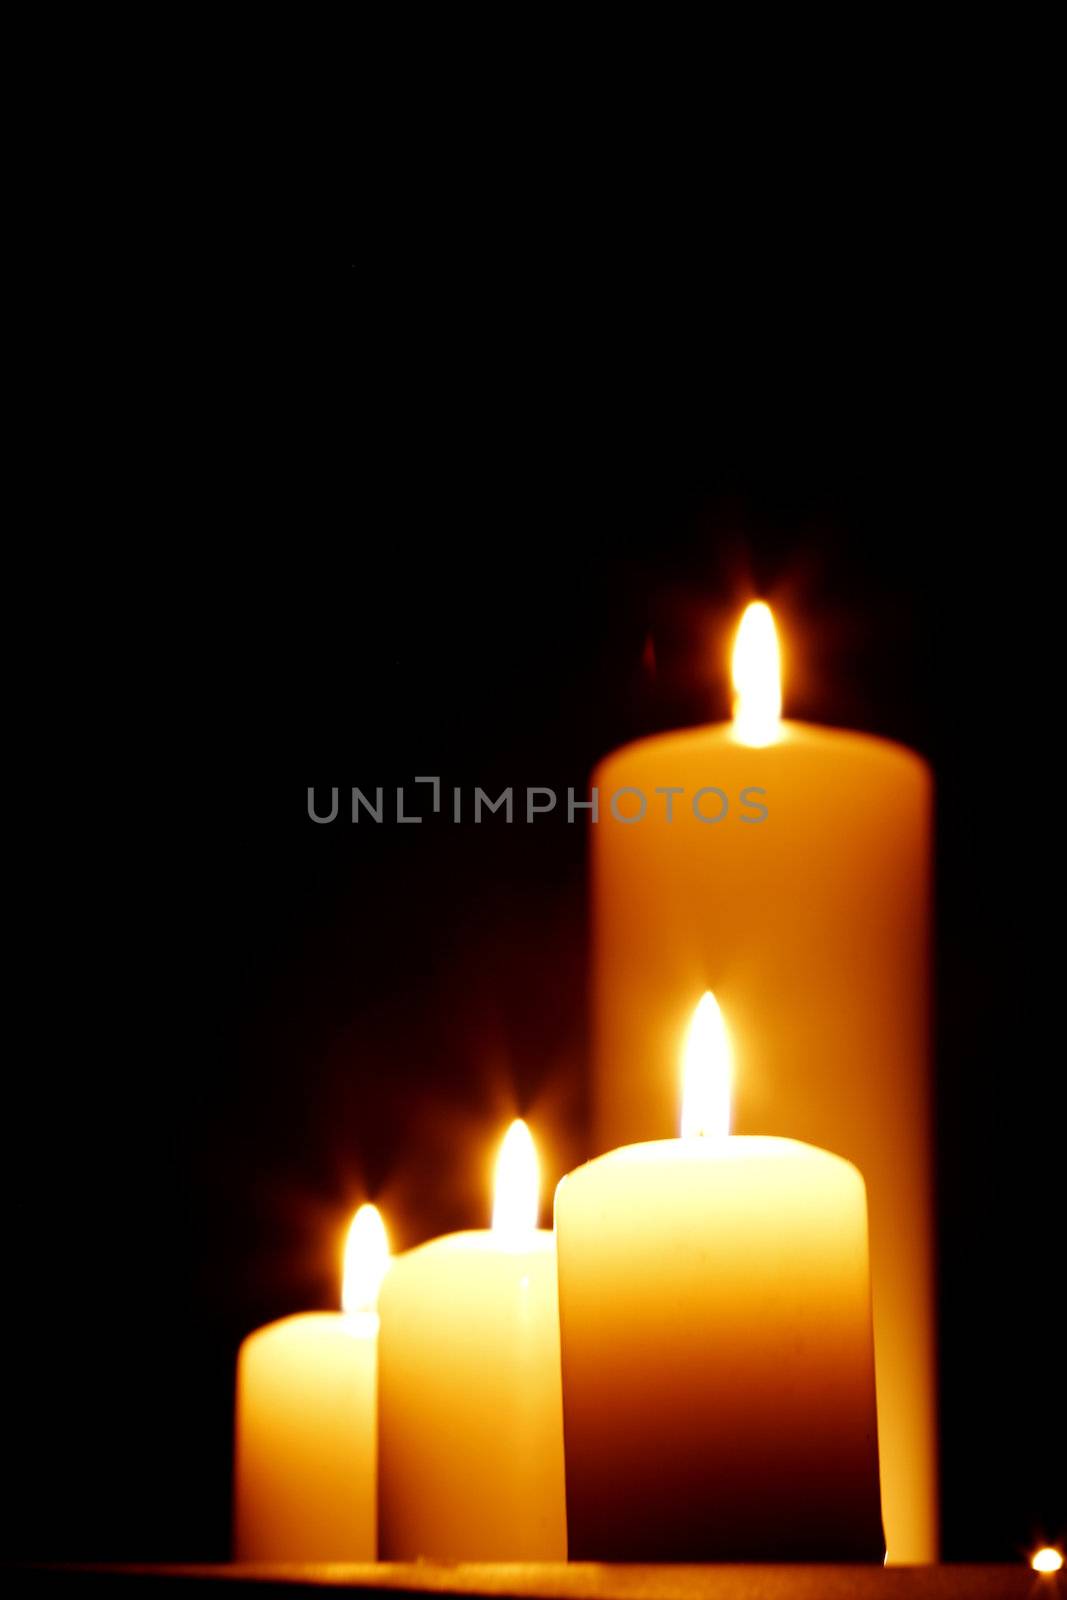 Closeup of burning candles on black background